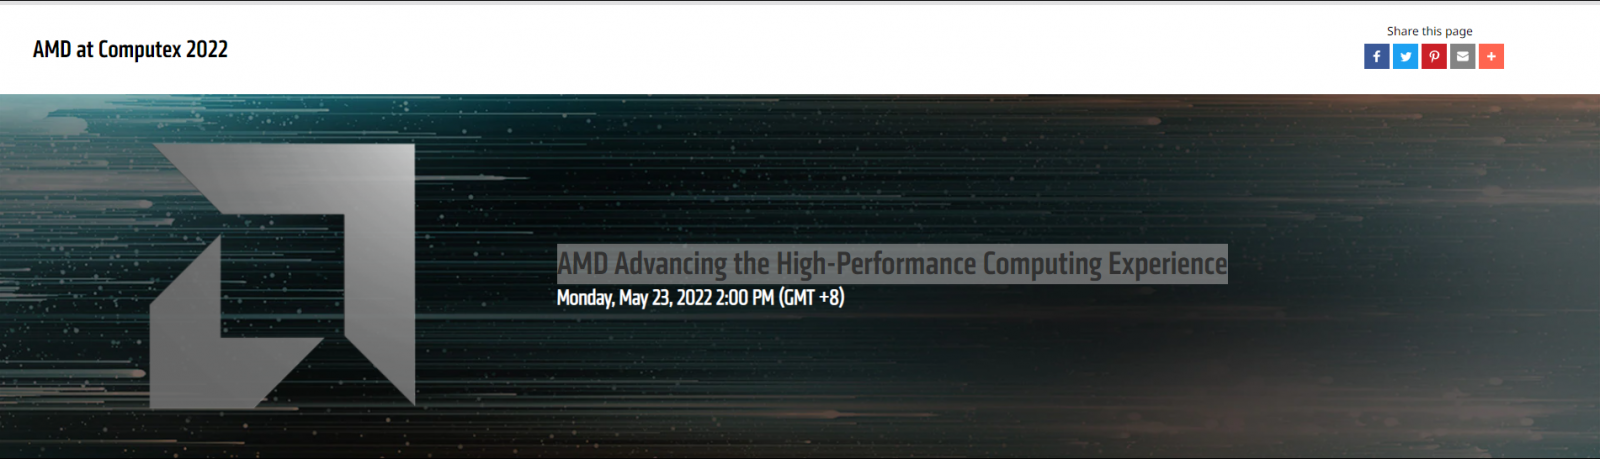 AMD COMPUTEX 2022 Banner.jpg.png